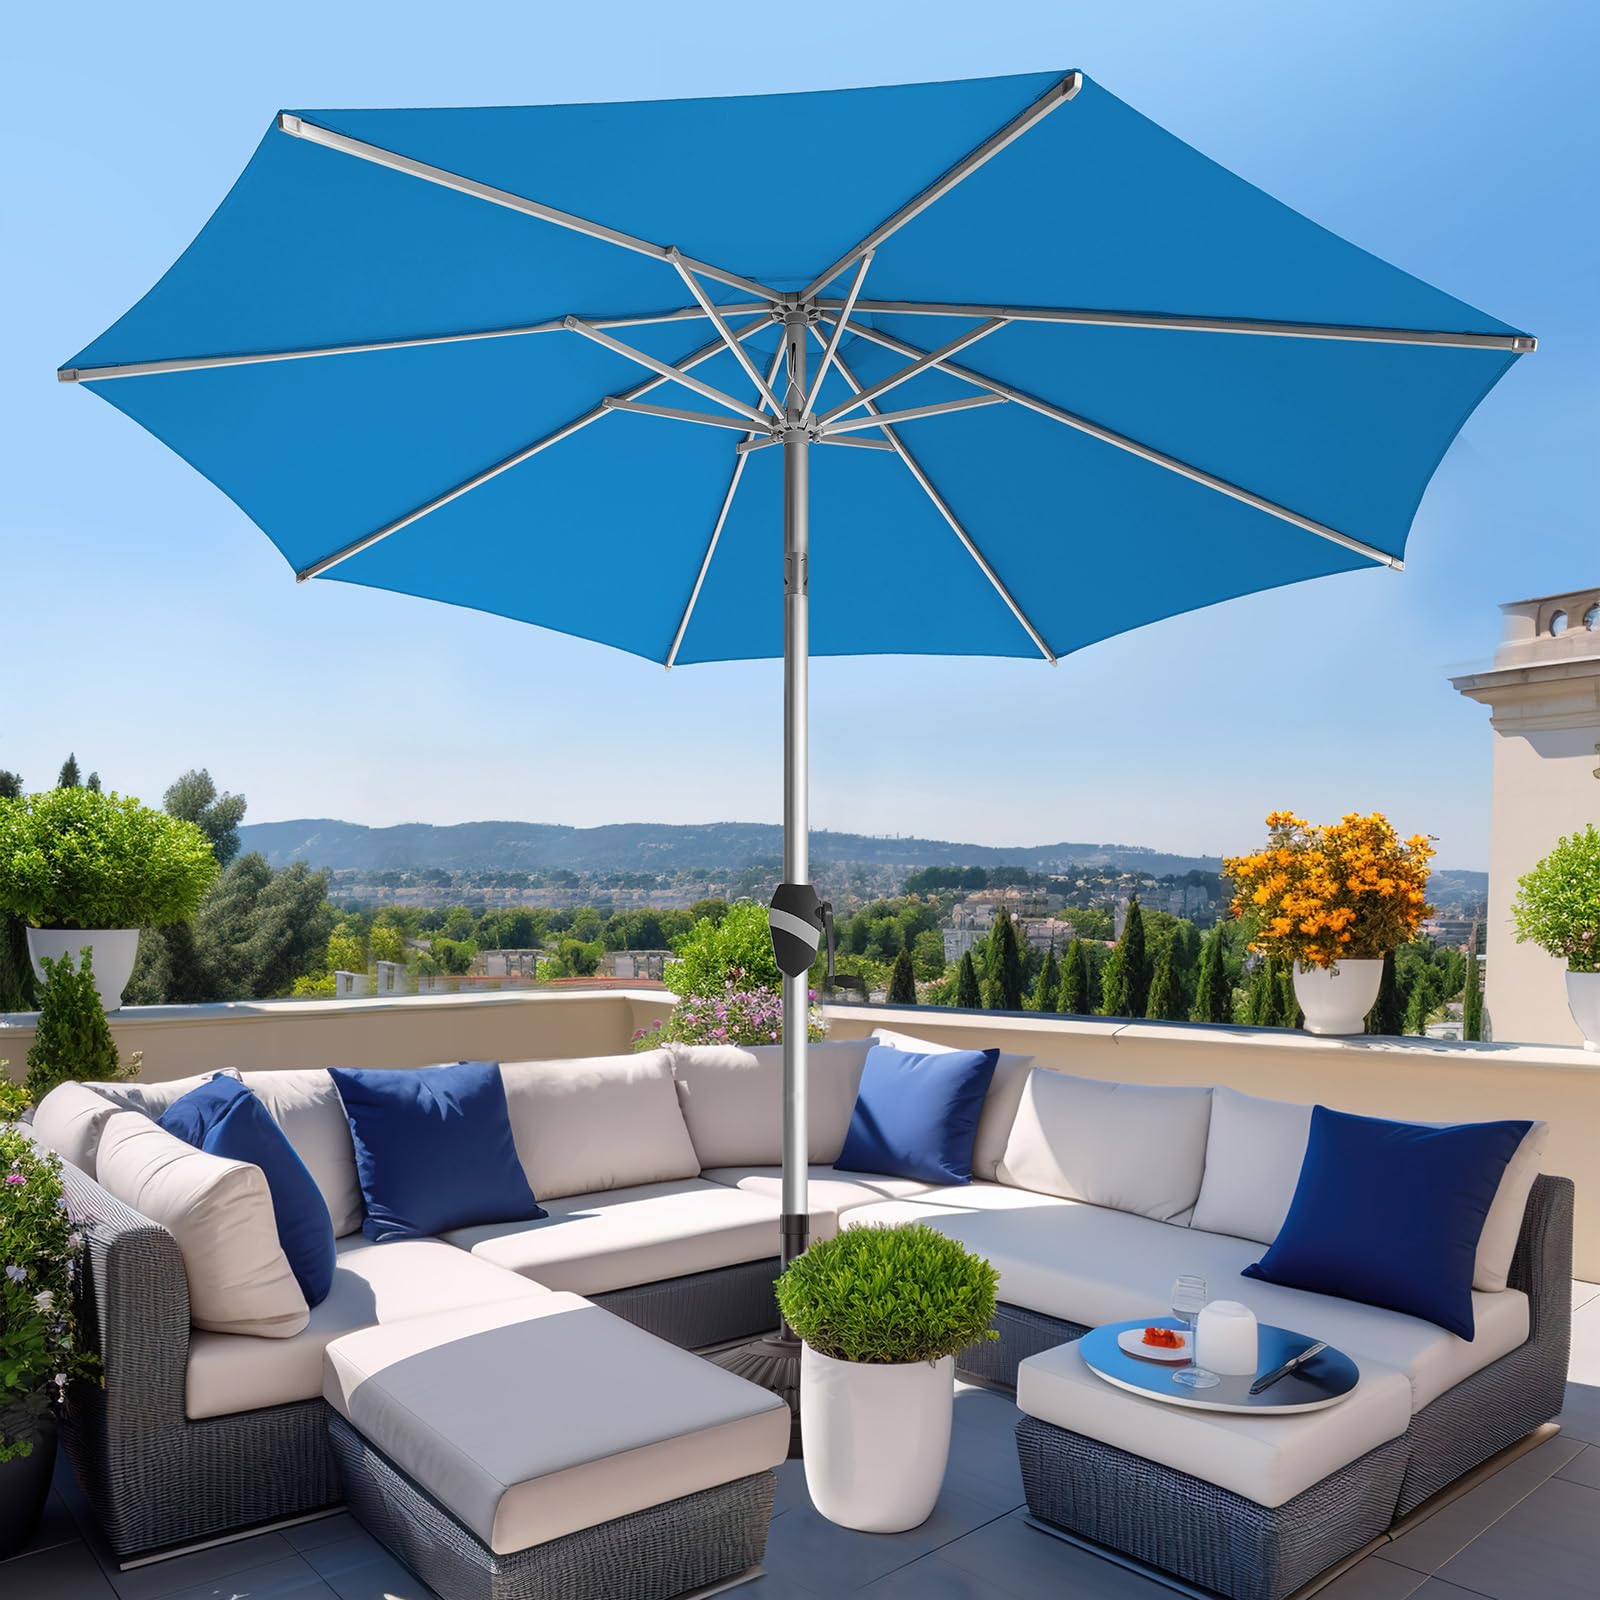 BLUU Aluminum Outdoor Patio Umbrella, 5-YEAR Fade-Resistant Outdoor Market Table Umbrella with Push Button Tilt, for Pool, Deck, Garden and Lawn,Royal Blue